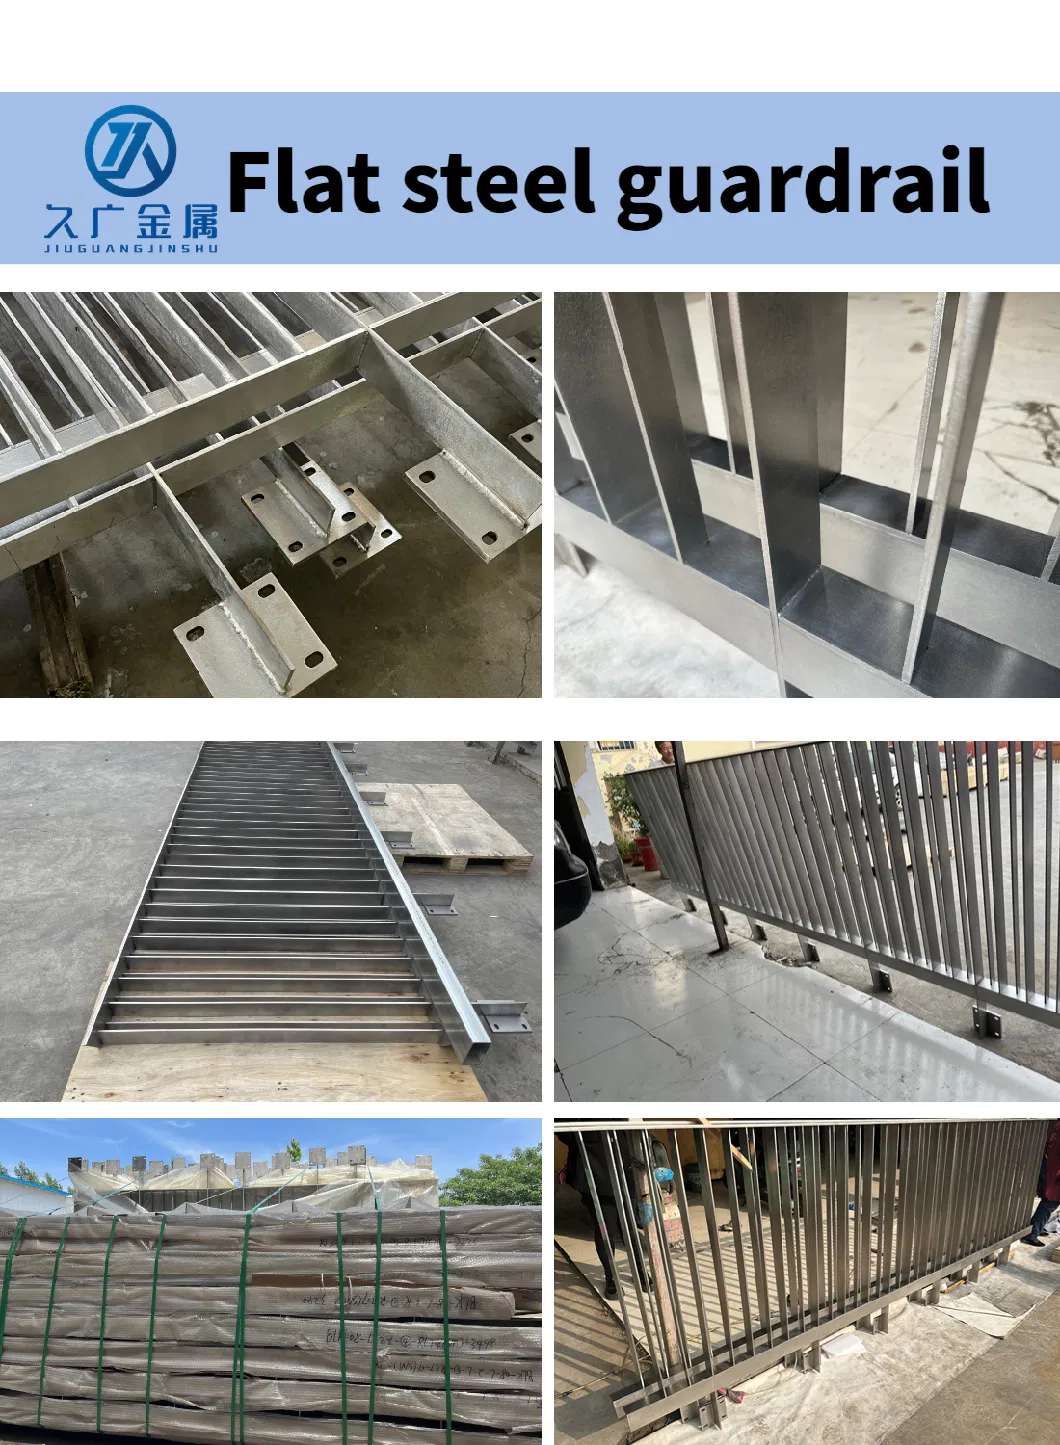 Stainless Steel Flat Steel Guardrail Balcony Stair Guardrail Safety Fence 304 Stainless Steel Tube Handrail Railing Guardrail High-Rise Villa Stair Handrail